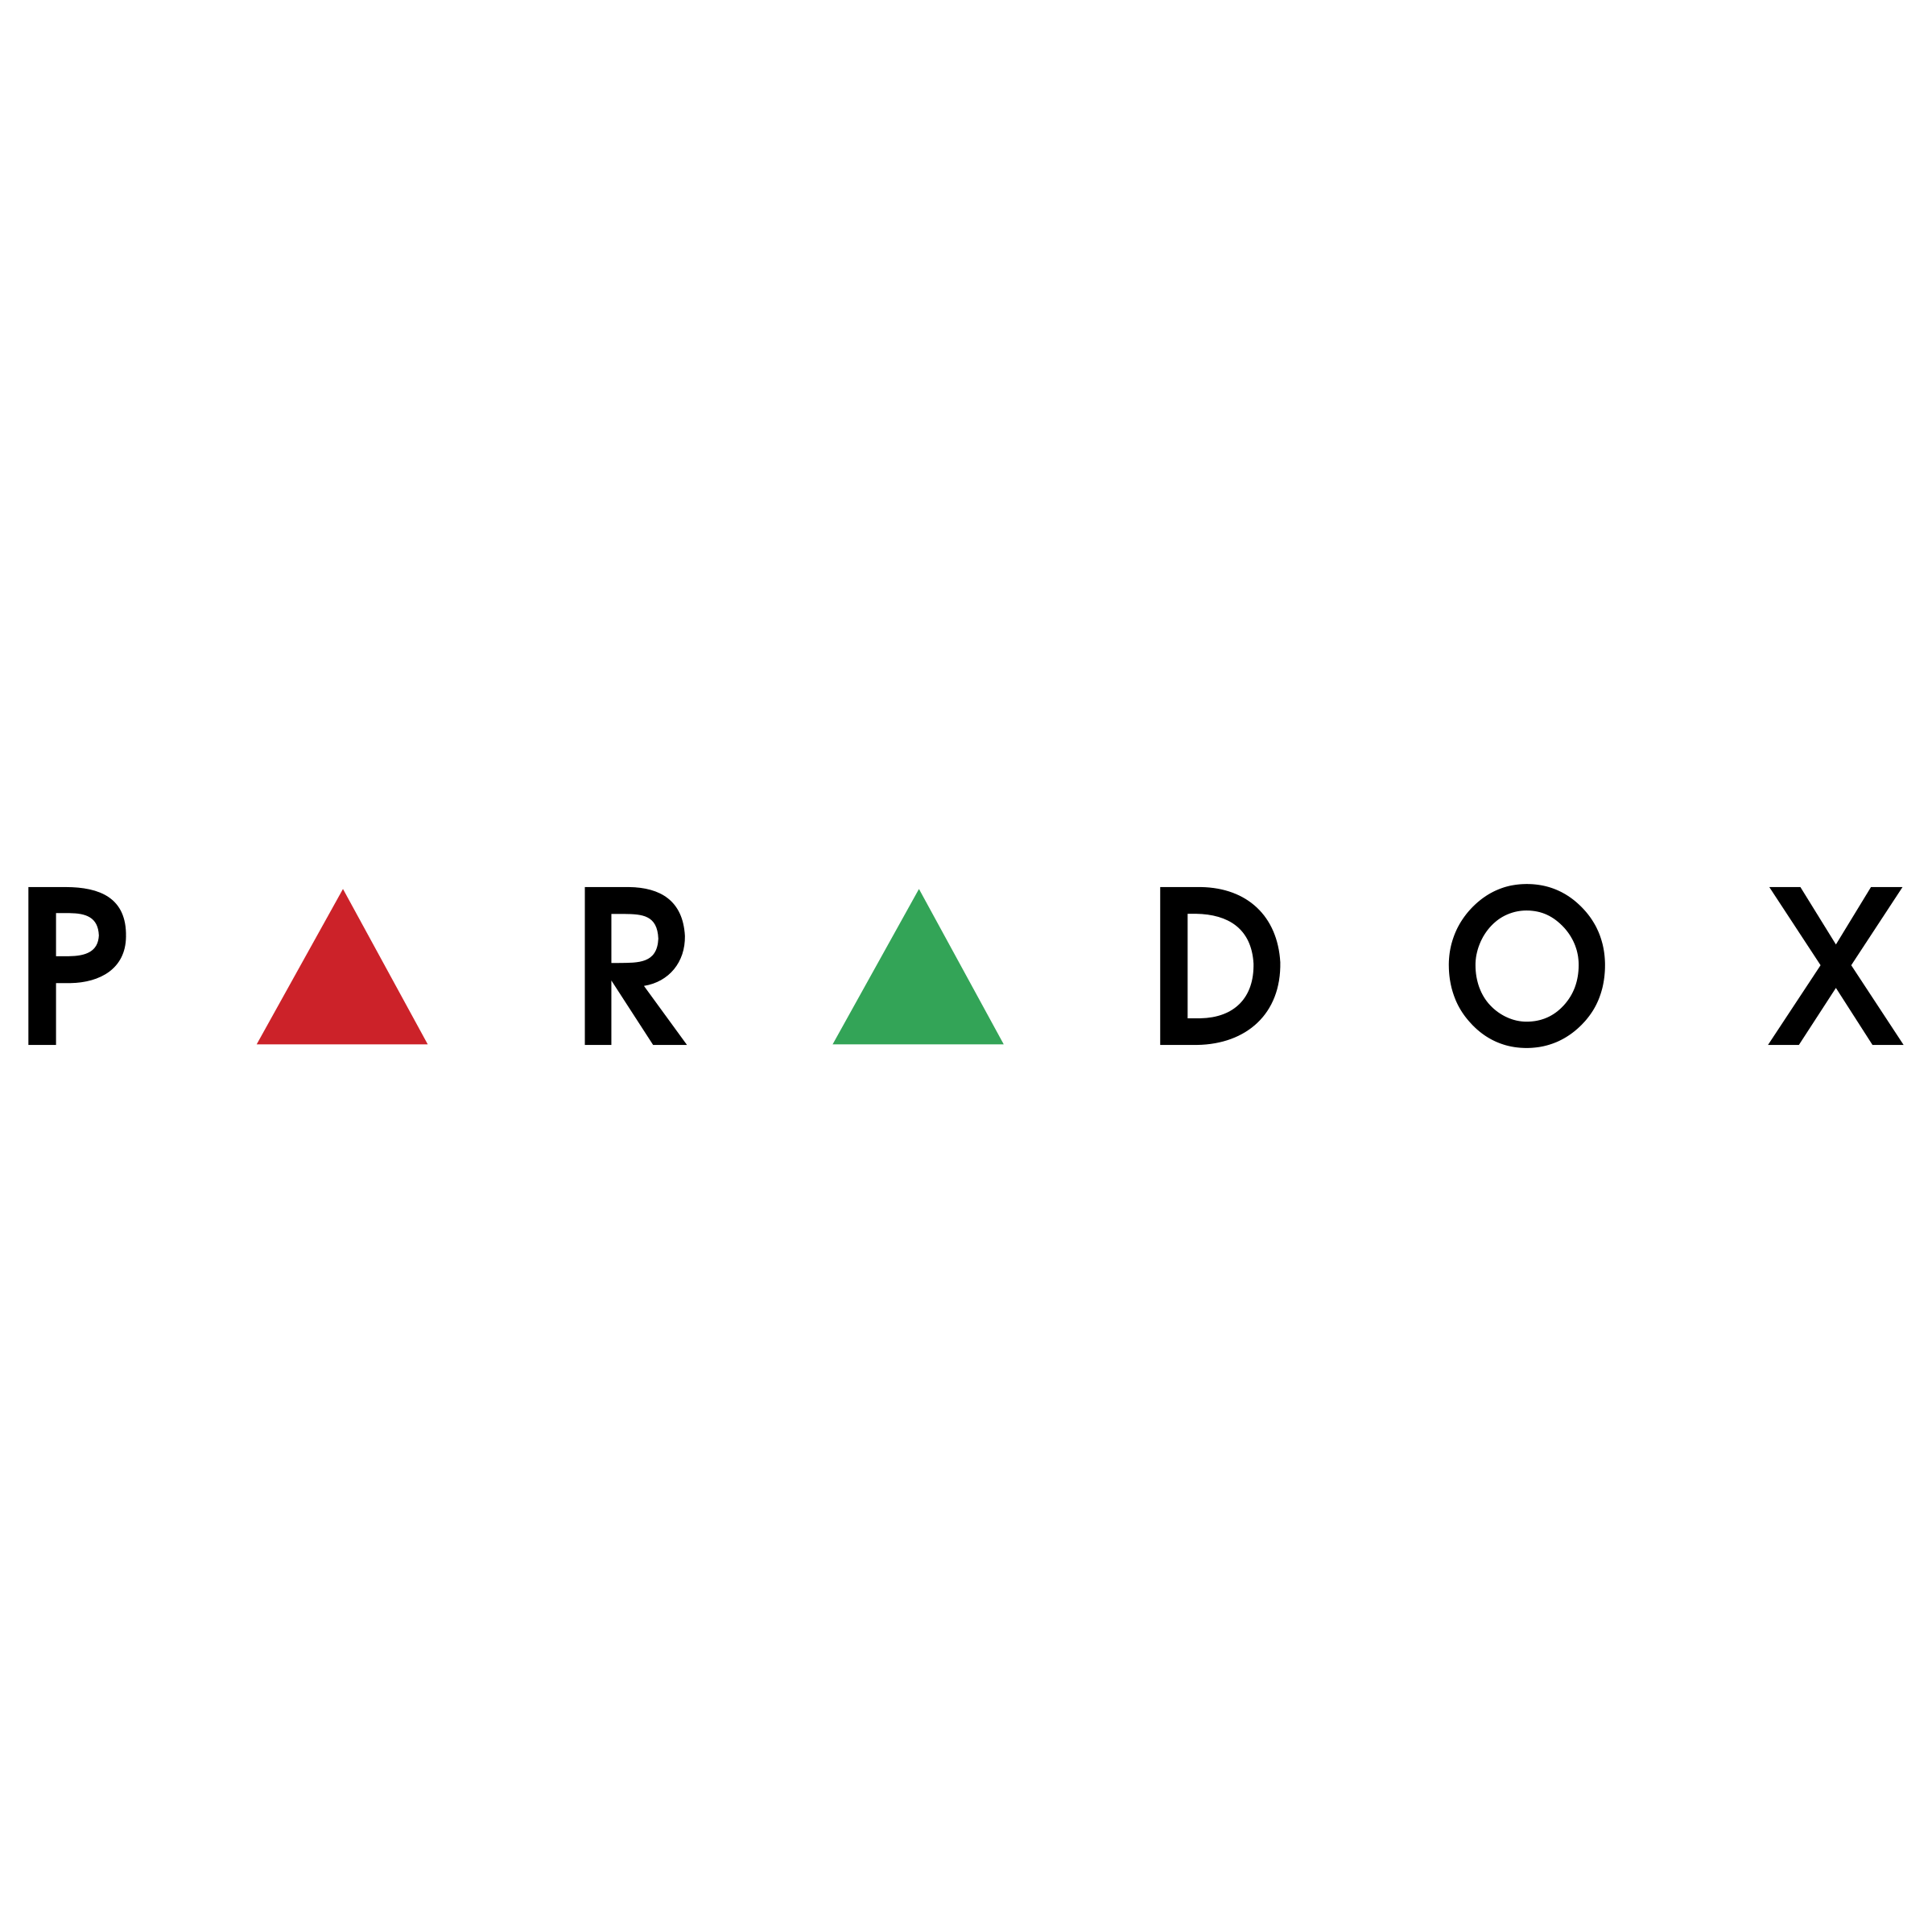 Paradox Logo - Paradox Logo PNG Transparent & SVG Vector